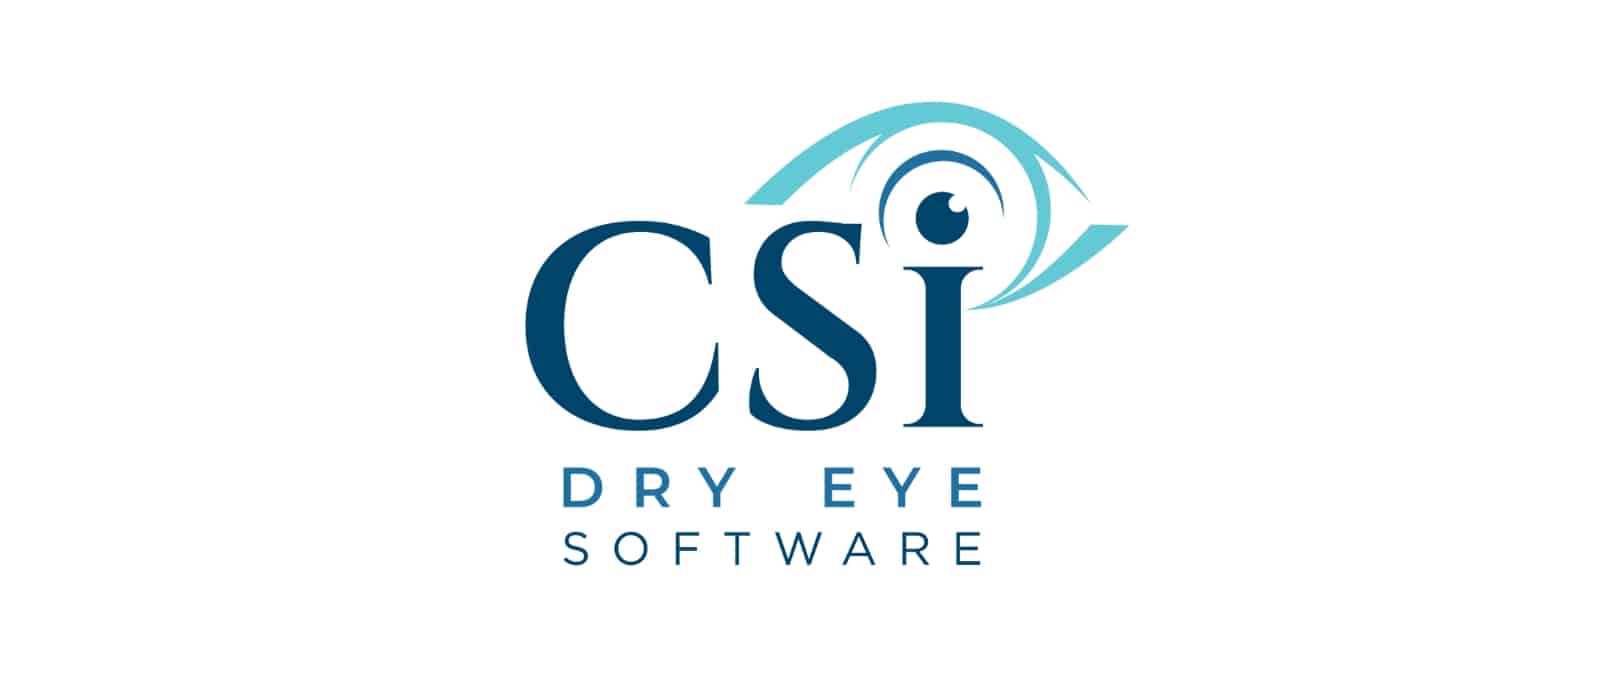 CSI Dry eye software